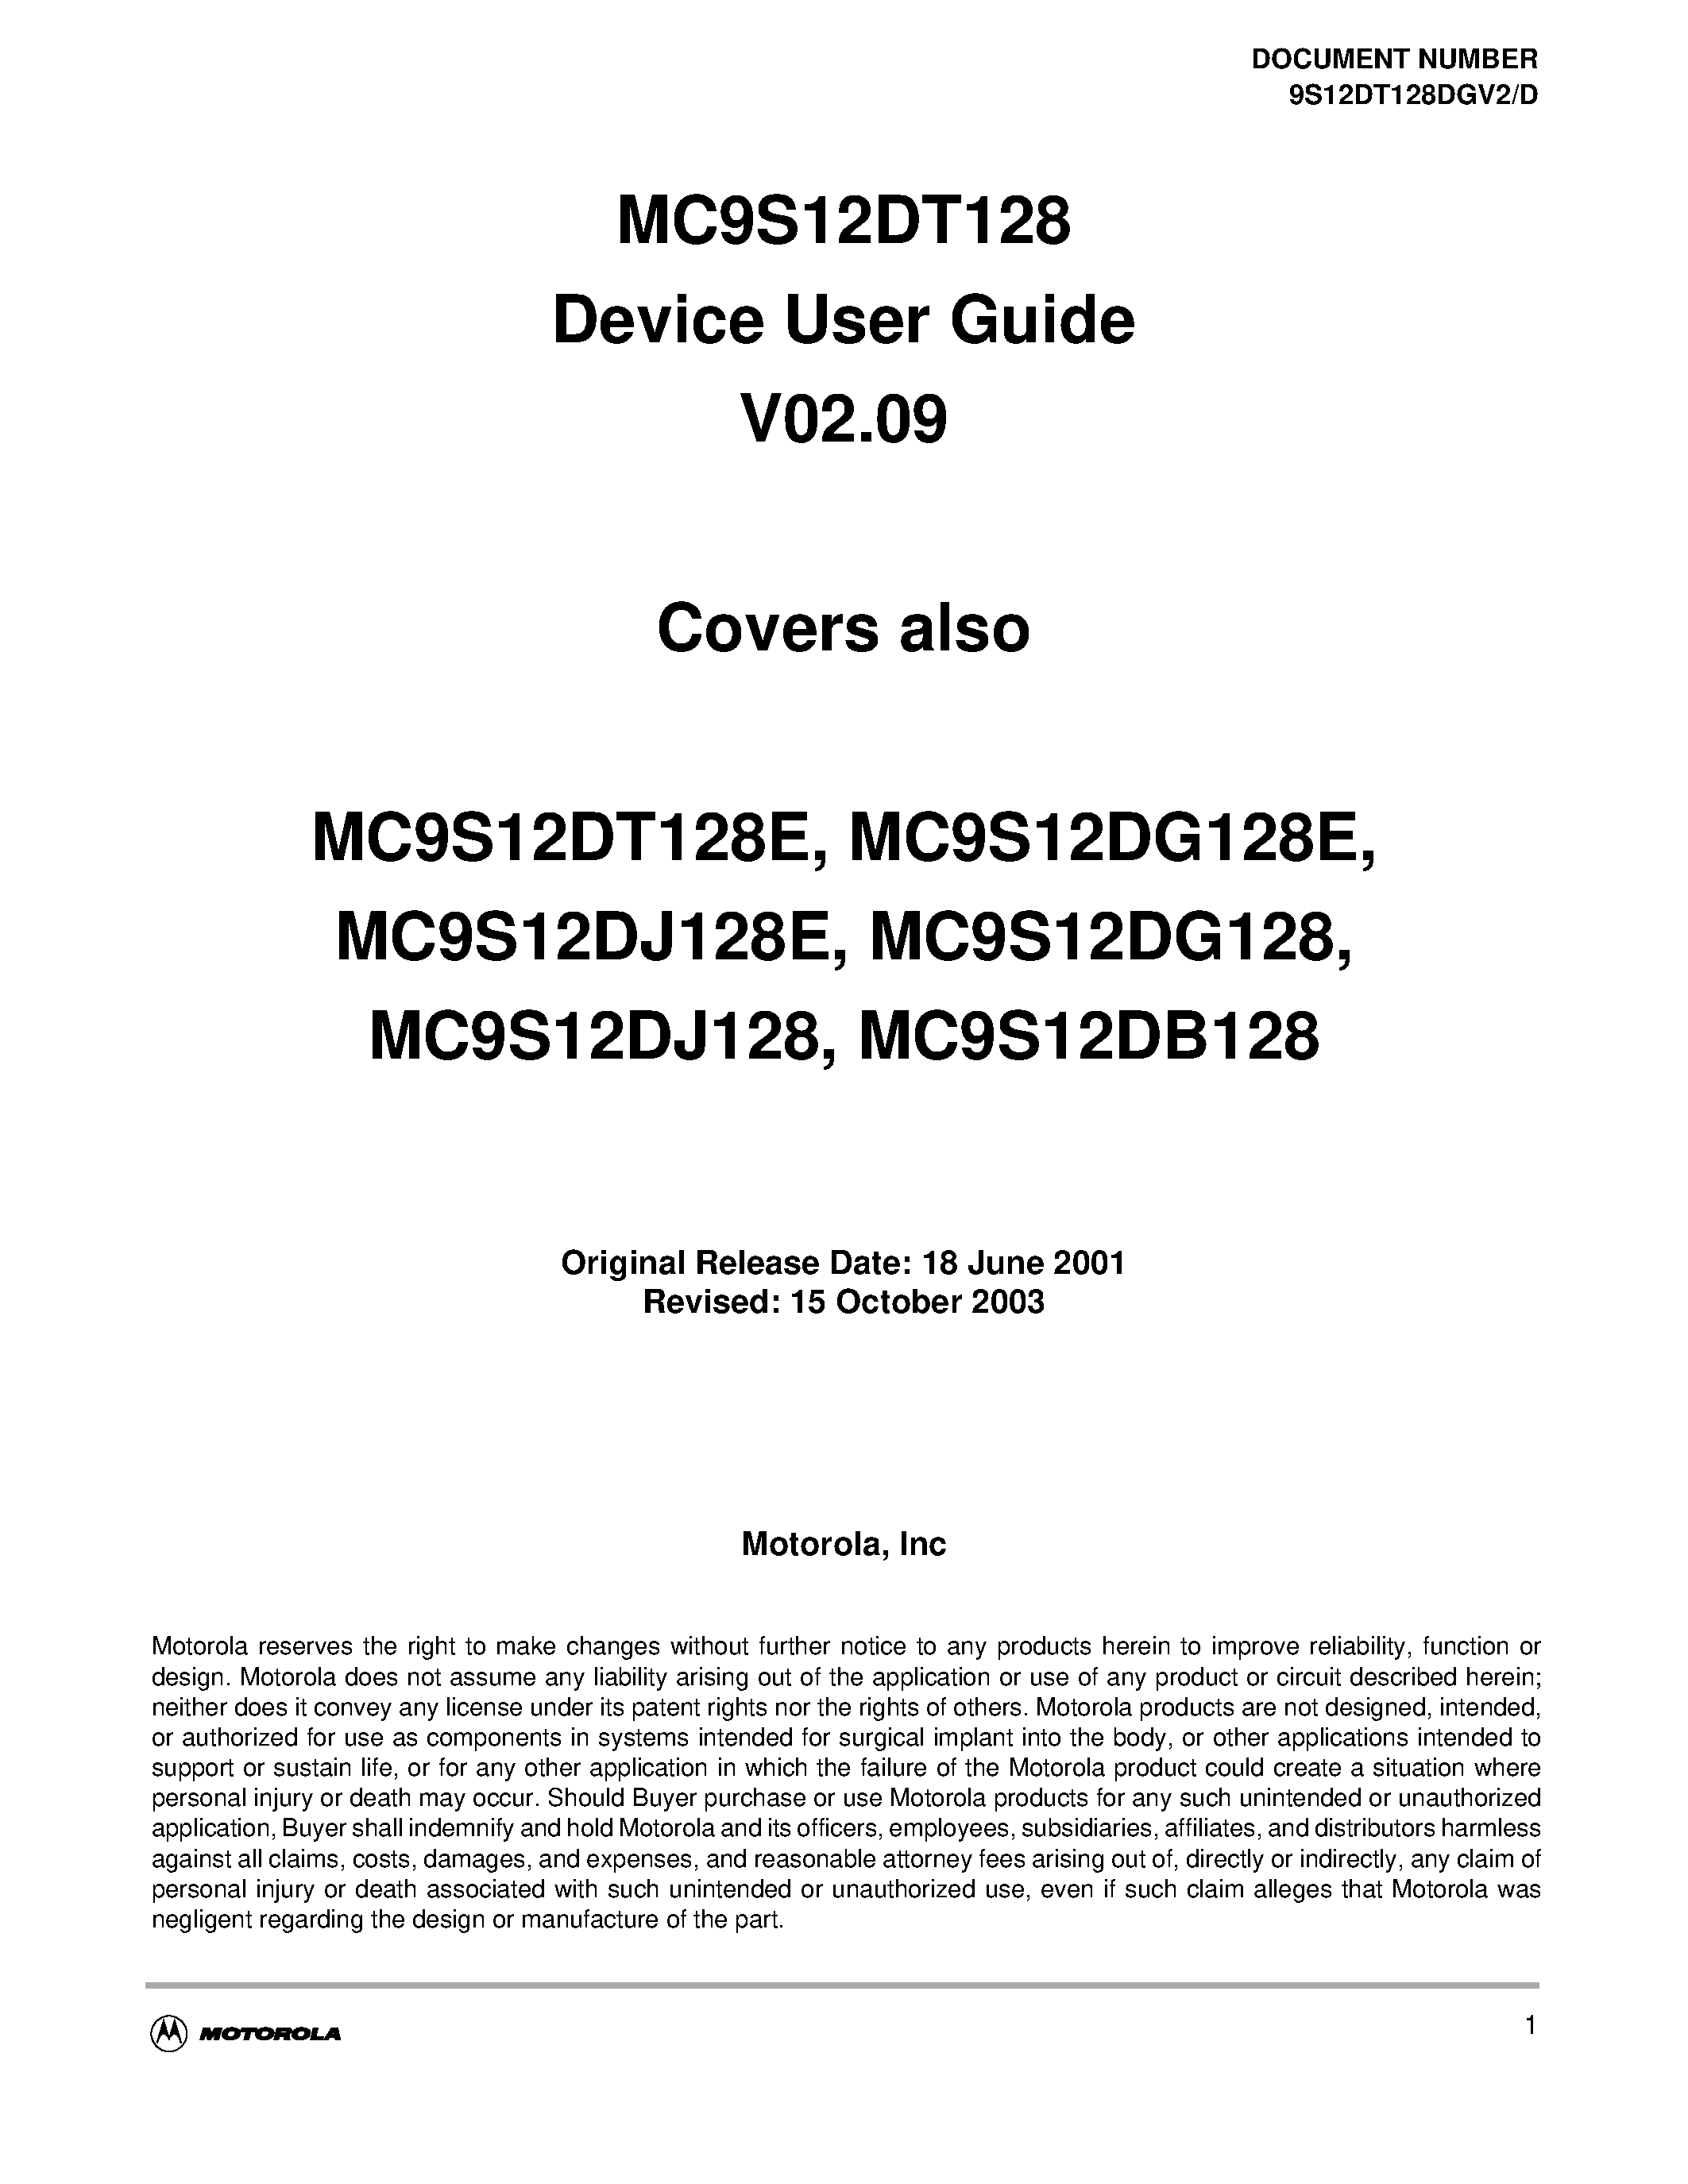 Даташит S12OSCV2D - MC9S12DT128 Device User Guide V02.09 страница 1